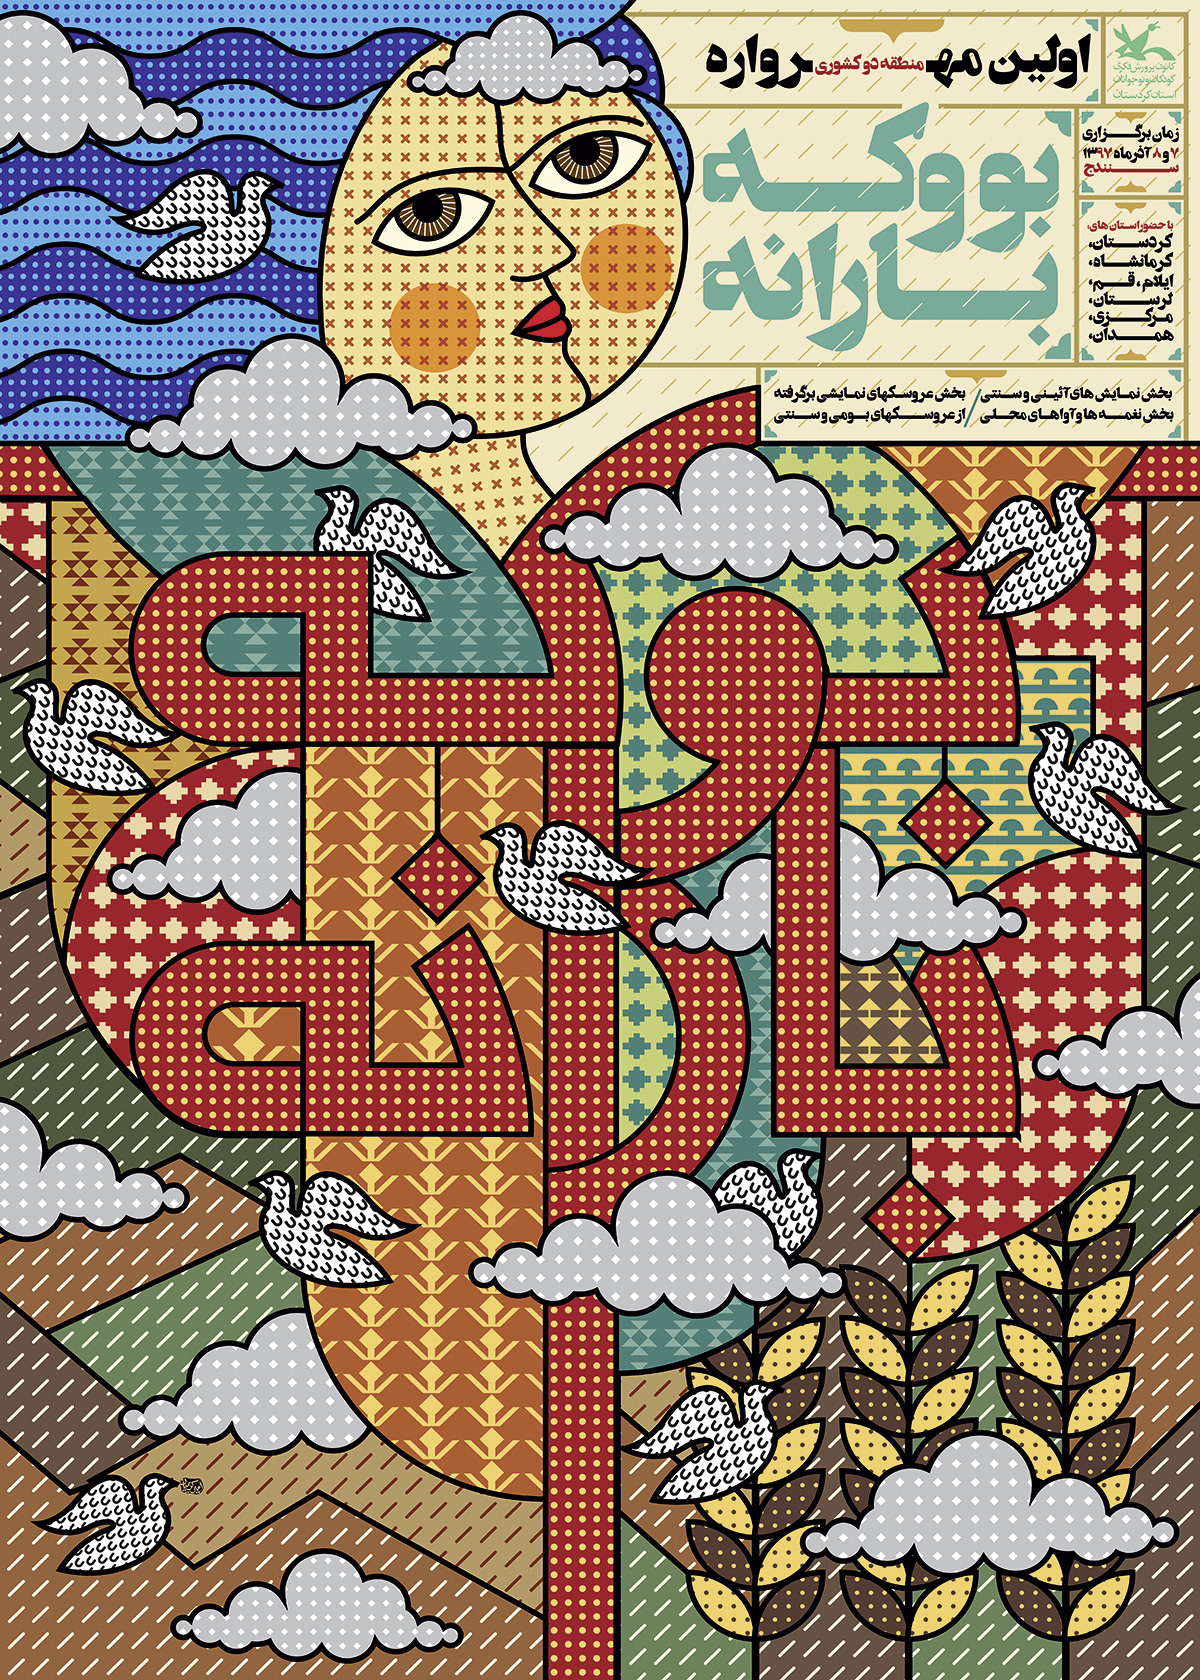 MK&G_InnereStrukturen_AeussereRhythmen_Amir-Karimian_Poster-of-Kurdish-Puppets-Festival_2019